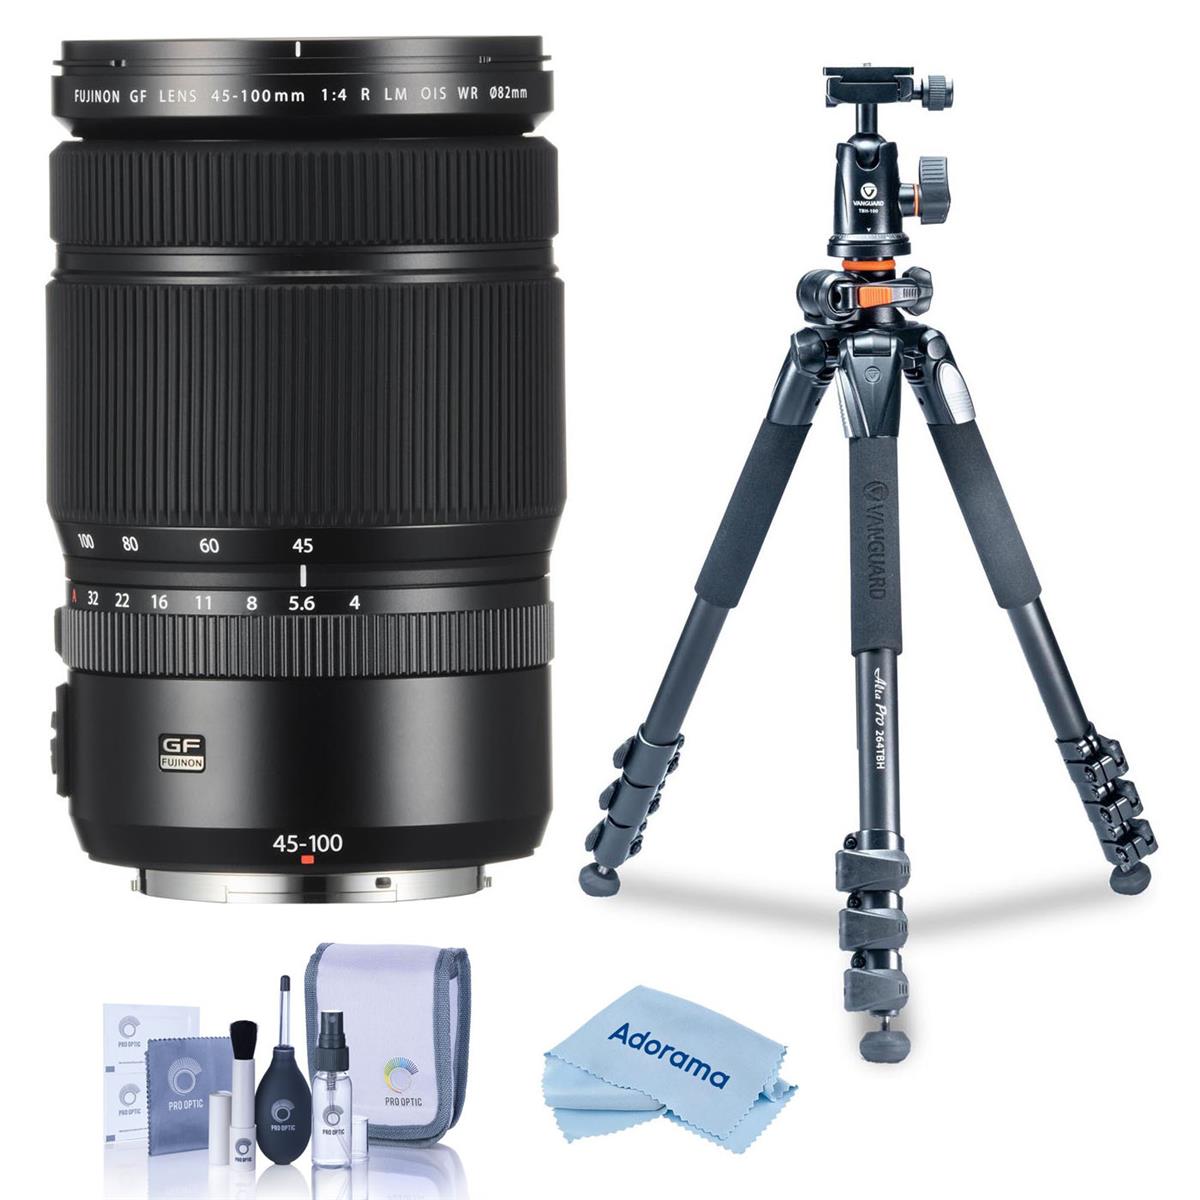 Image of Fujifilm GF 45-100mm f/4 R LM WR Lens with Vanguard Alta Pro 264AT Tripod Kit